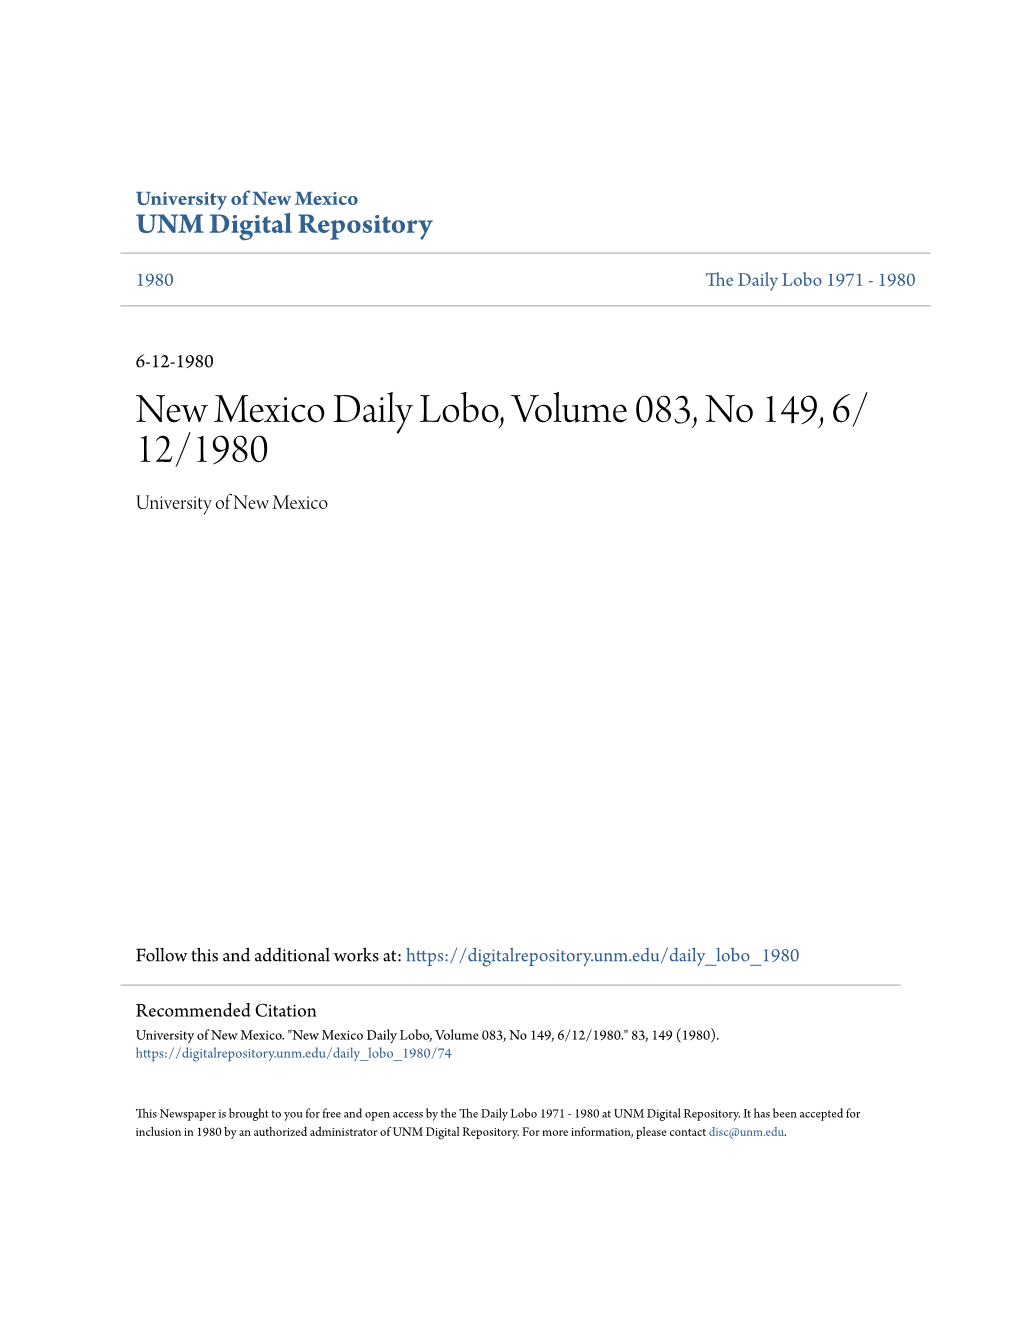 New Mexico Daily Lobo, Volume 083, No 149, 6/12/1980." 83, 149 (1980)